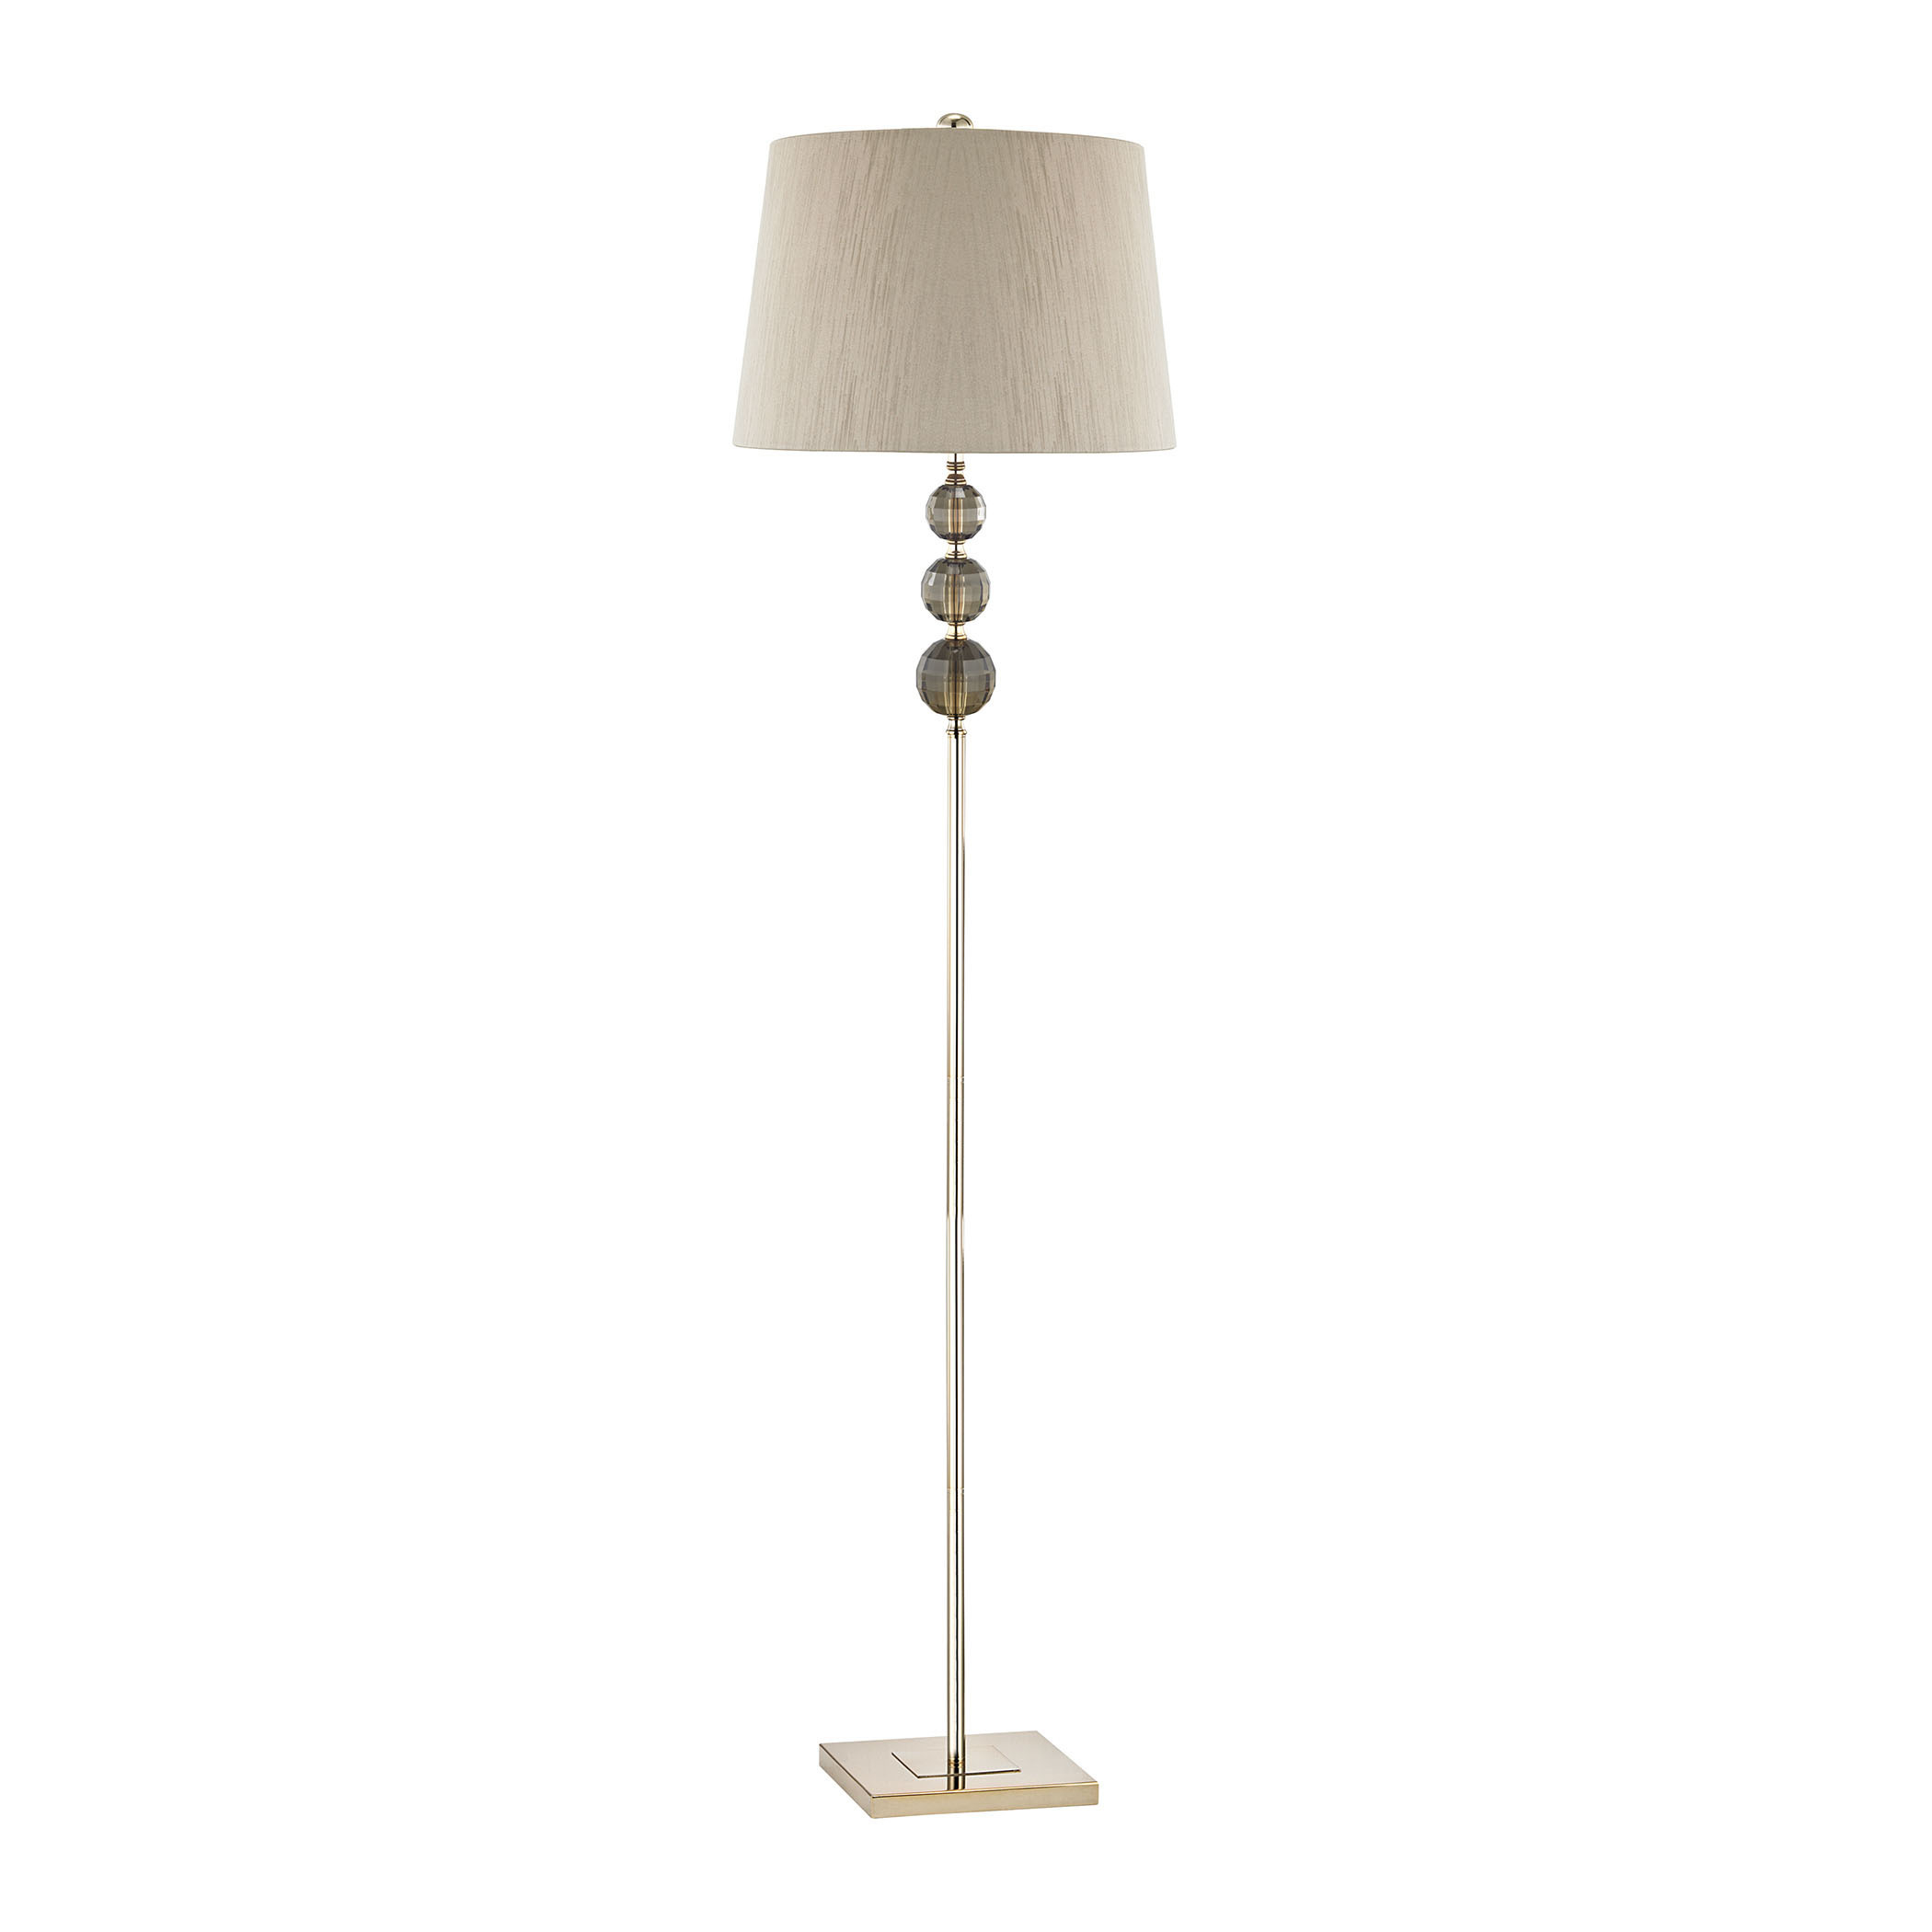 Dimond Lighting Collette Floor Lamp Gold regarding sizing 2100 X 2100